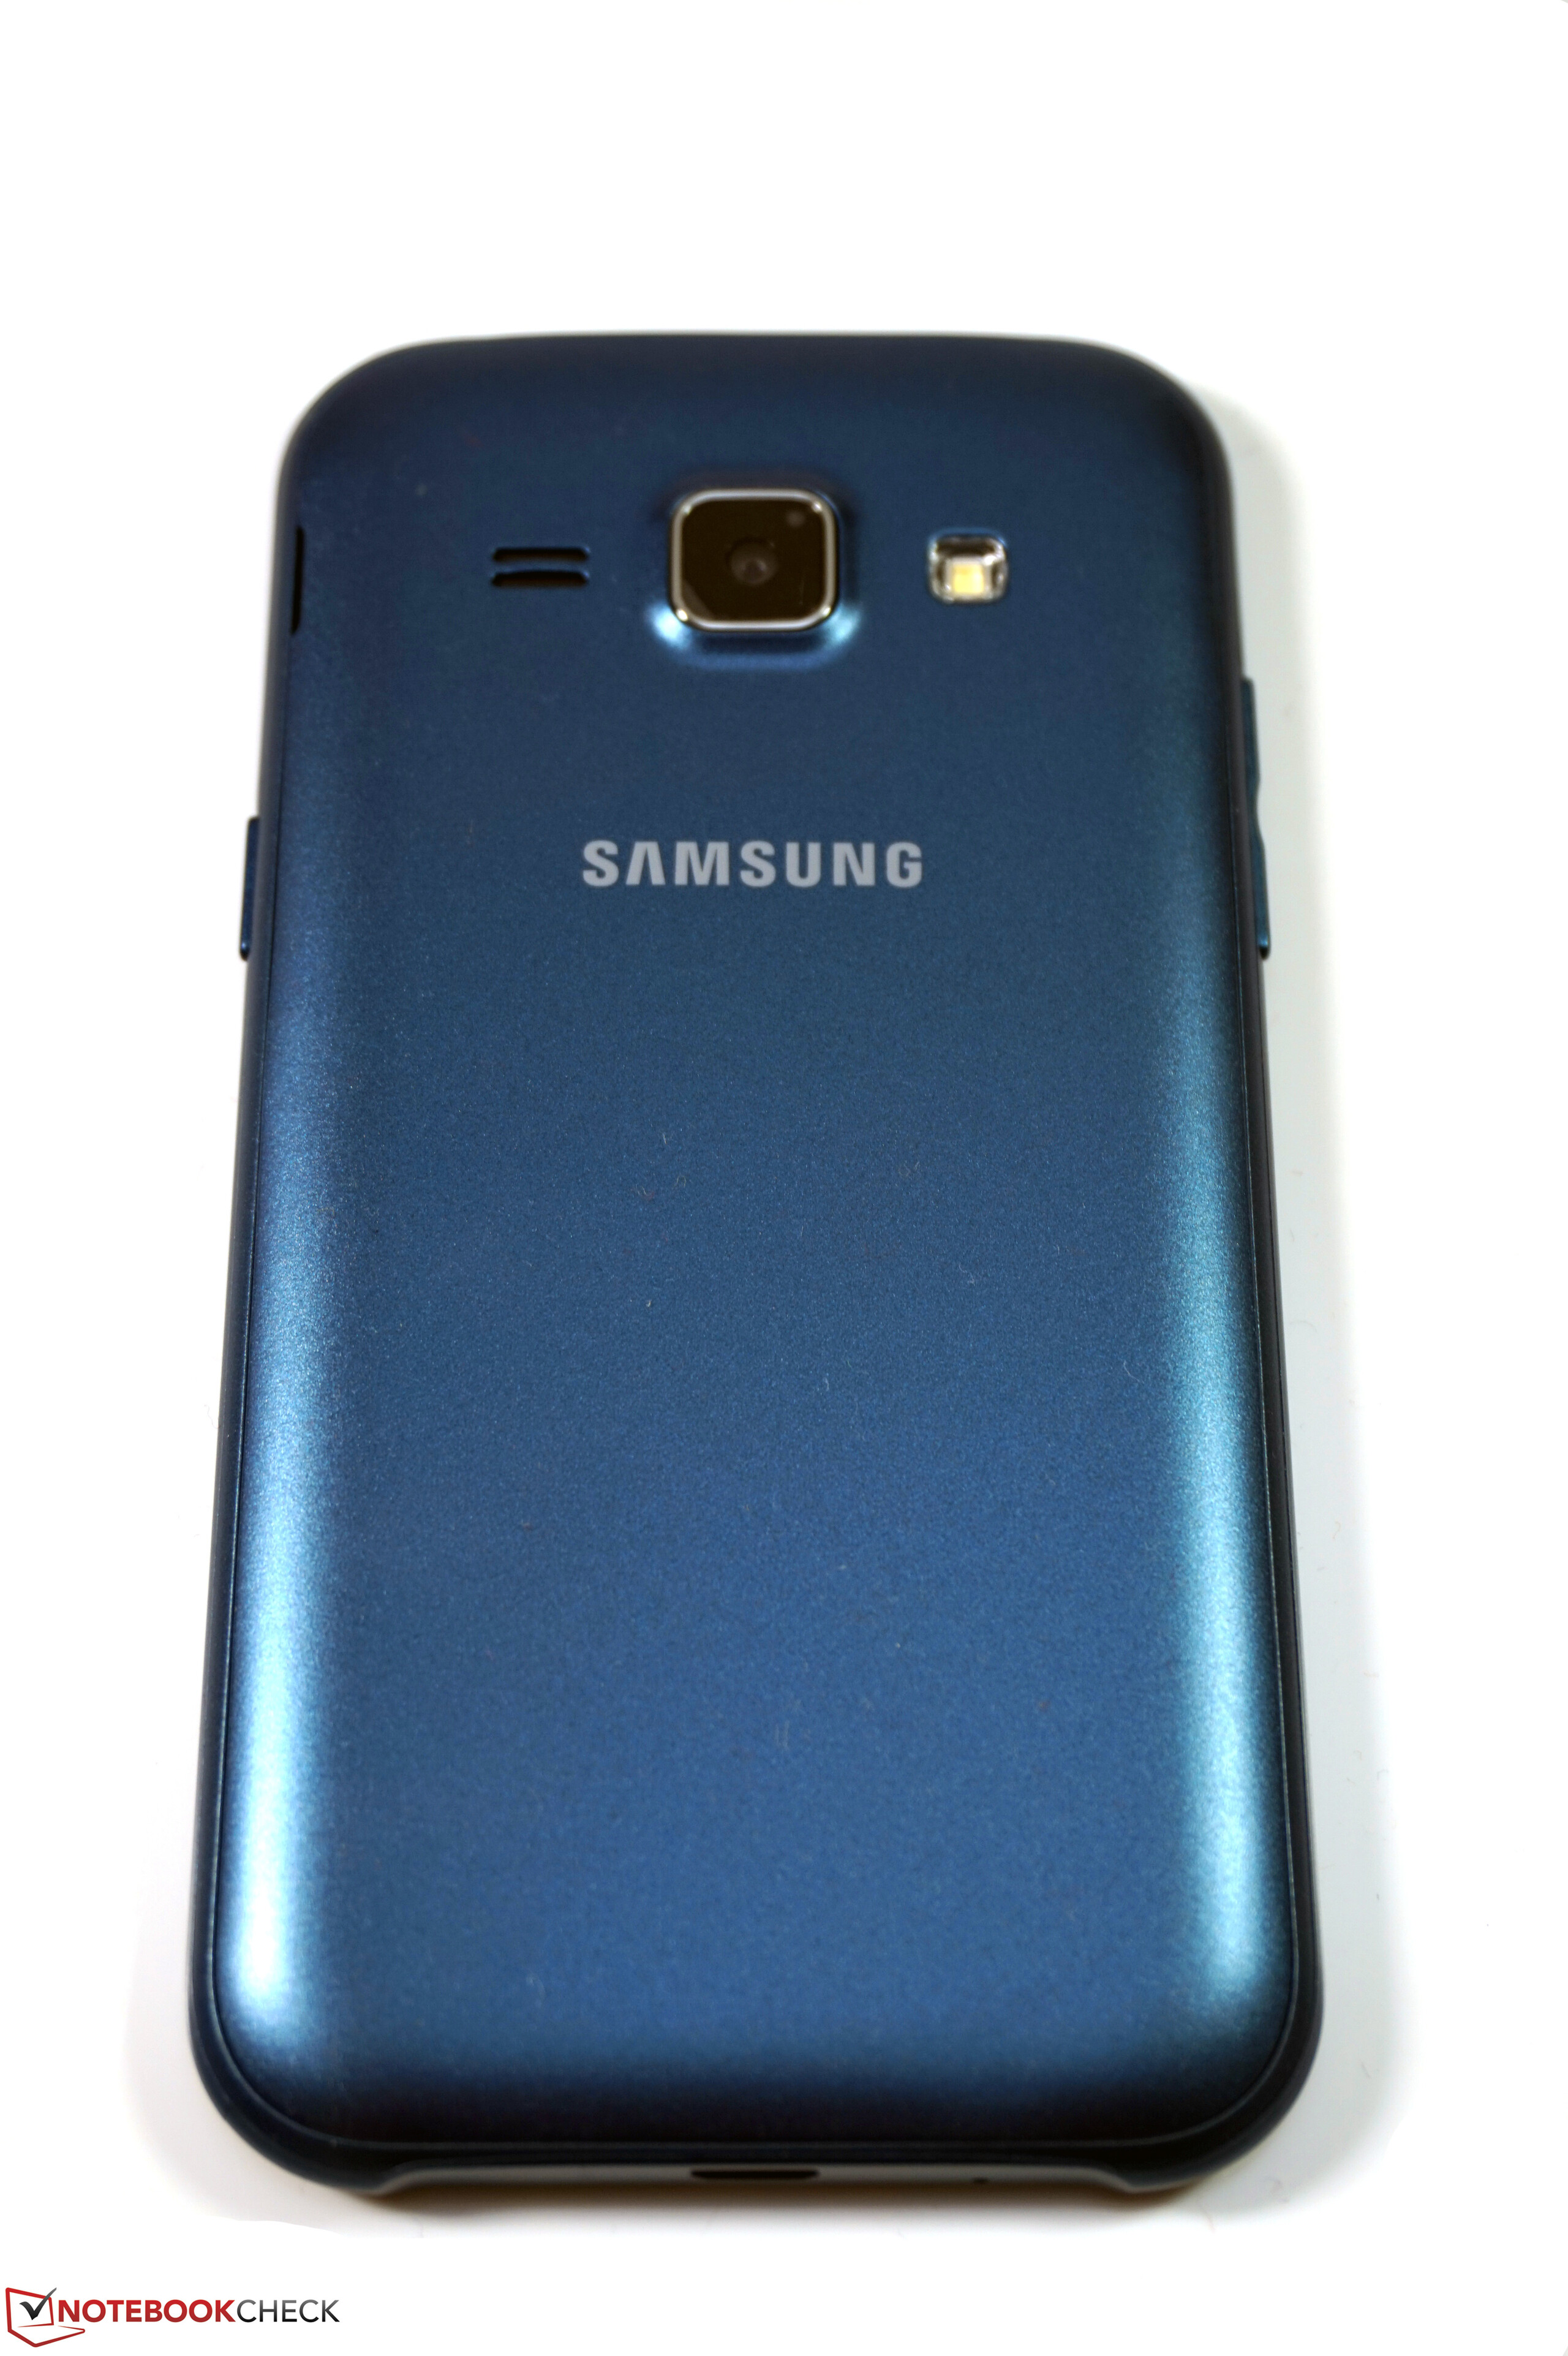 verdrietig Kroniek impliceren Samsung Galaxy J1 Smartphone Review - NotebookCheck.net Reviews